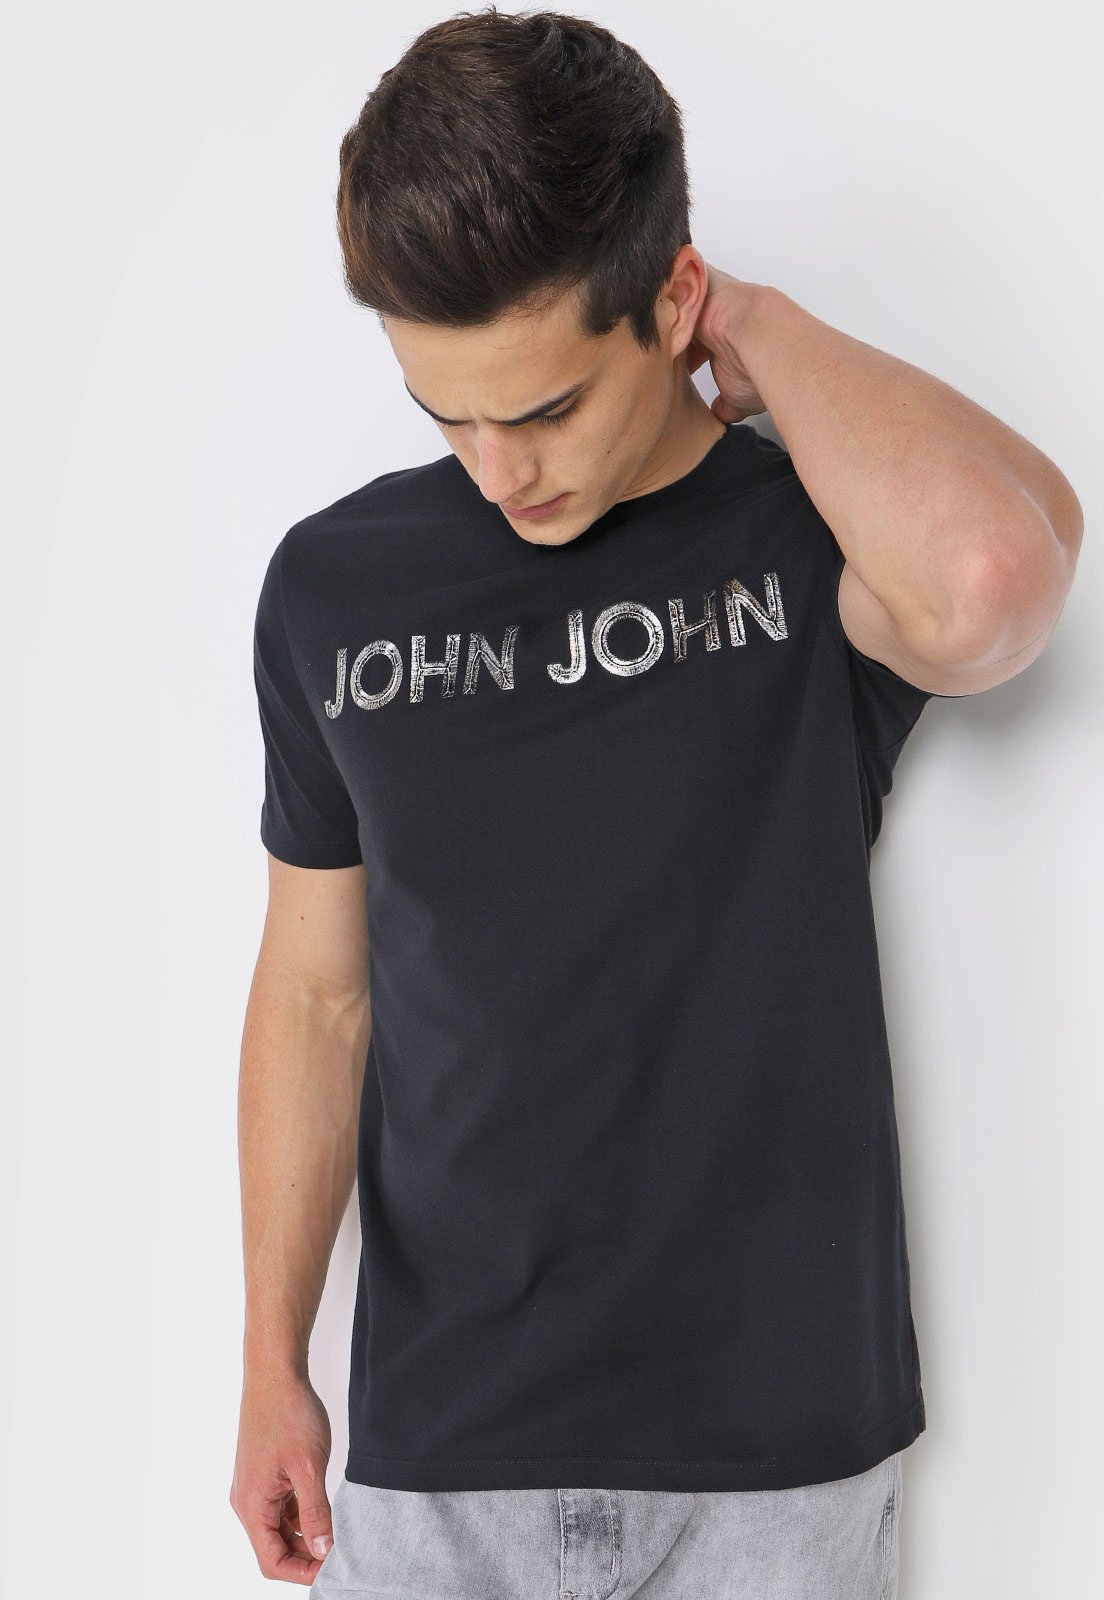 Camiseta John John Black Metal Feminina Black